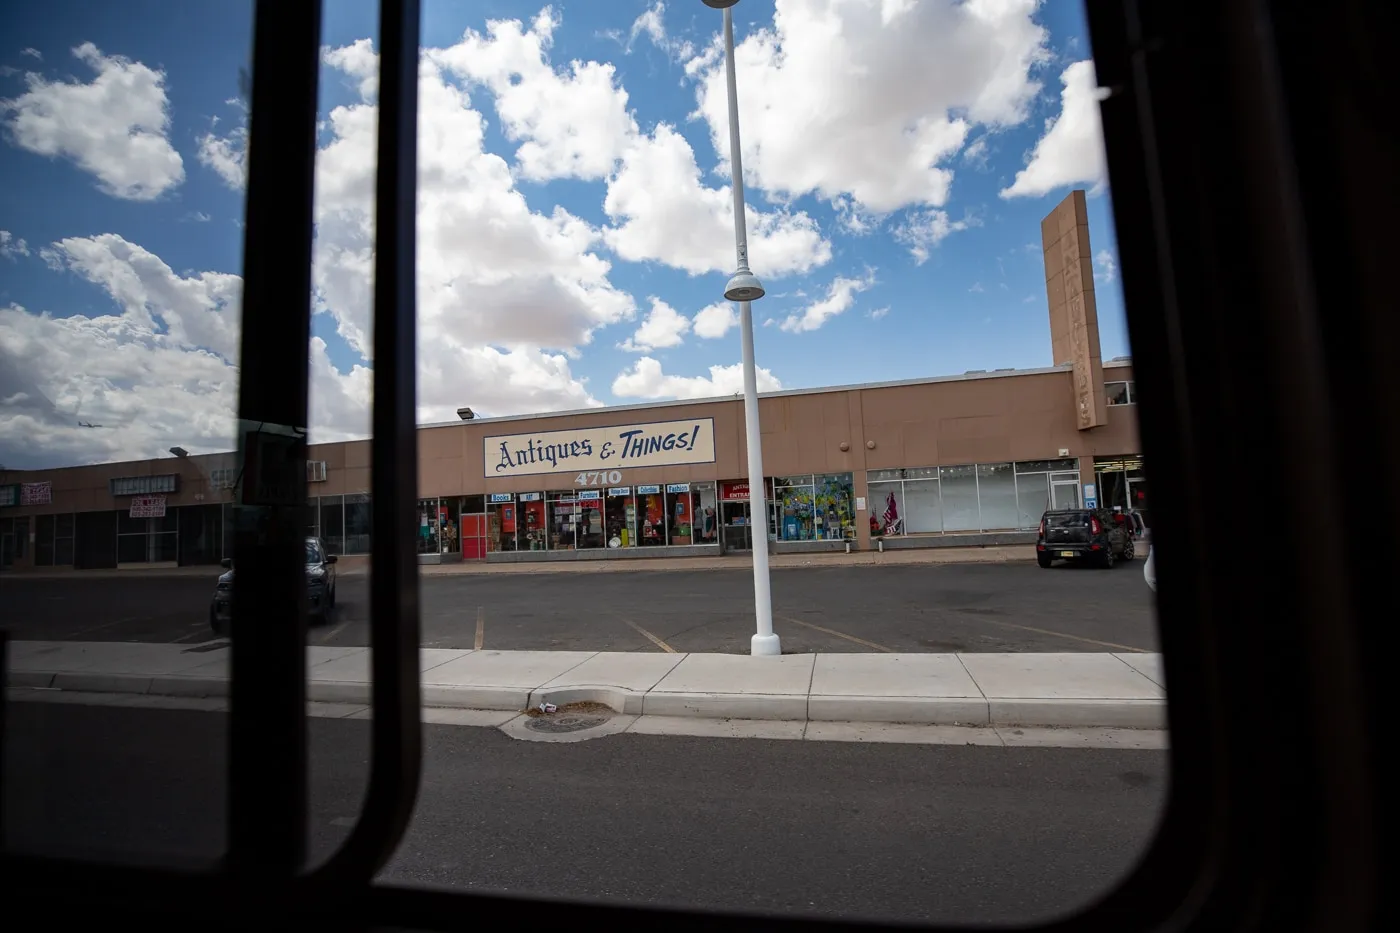 Breaking Bad RV Tour in Albuquerque, New Mexico